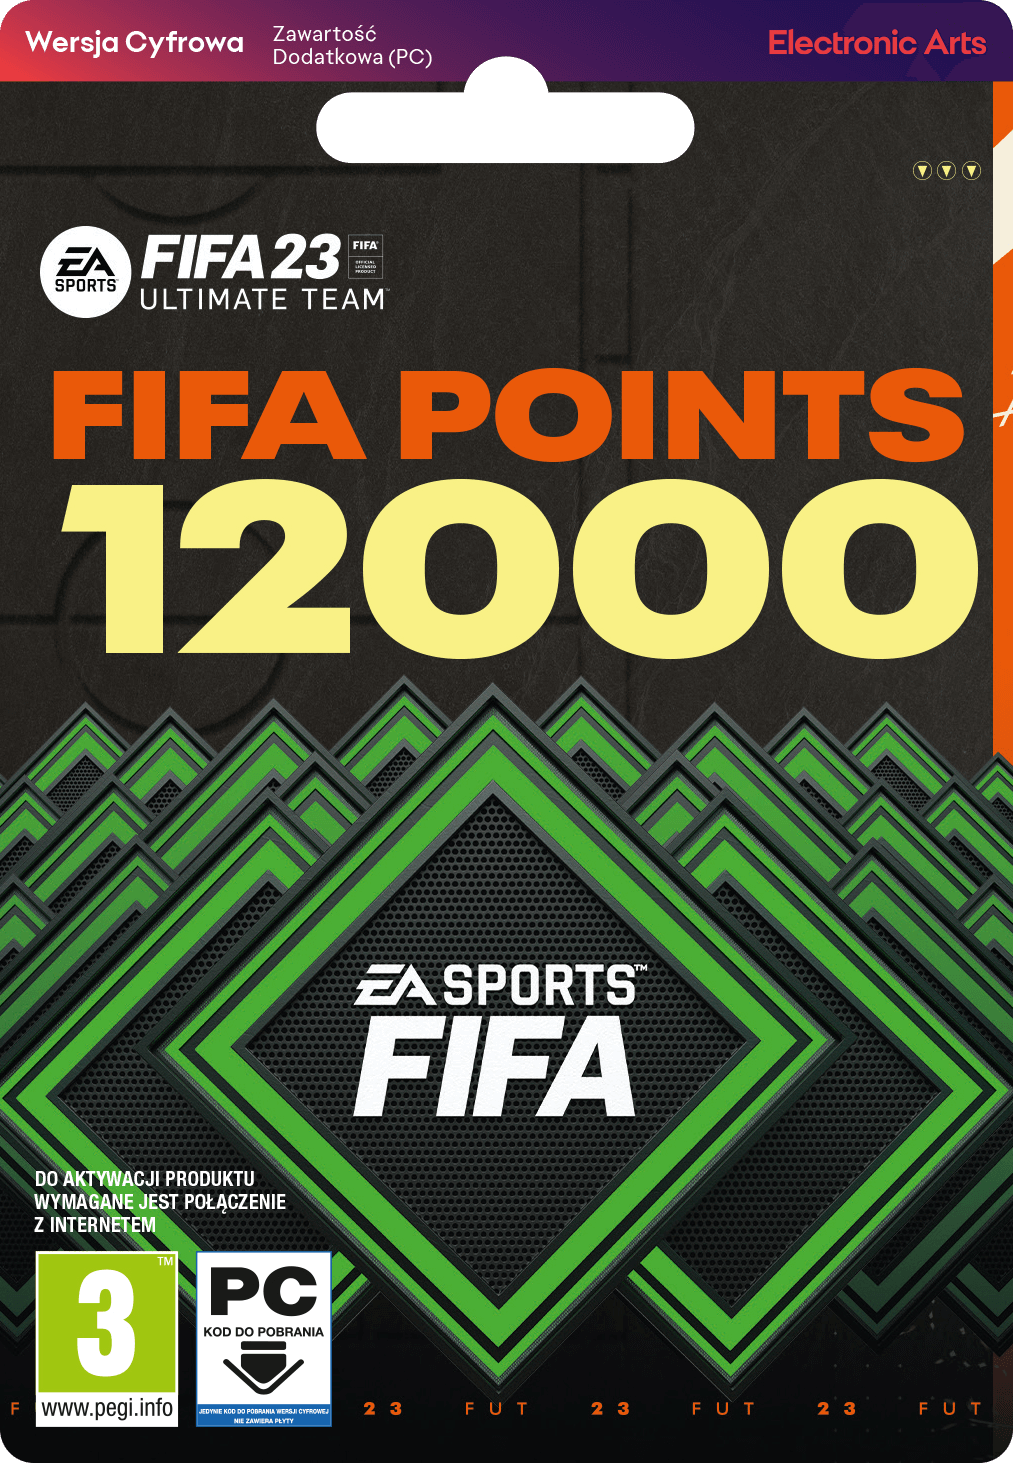 FIFA 23 ULTIMATE TEAM FIFA POINTS 12000